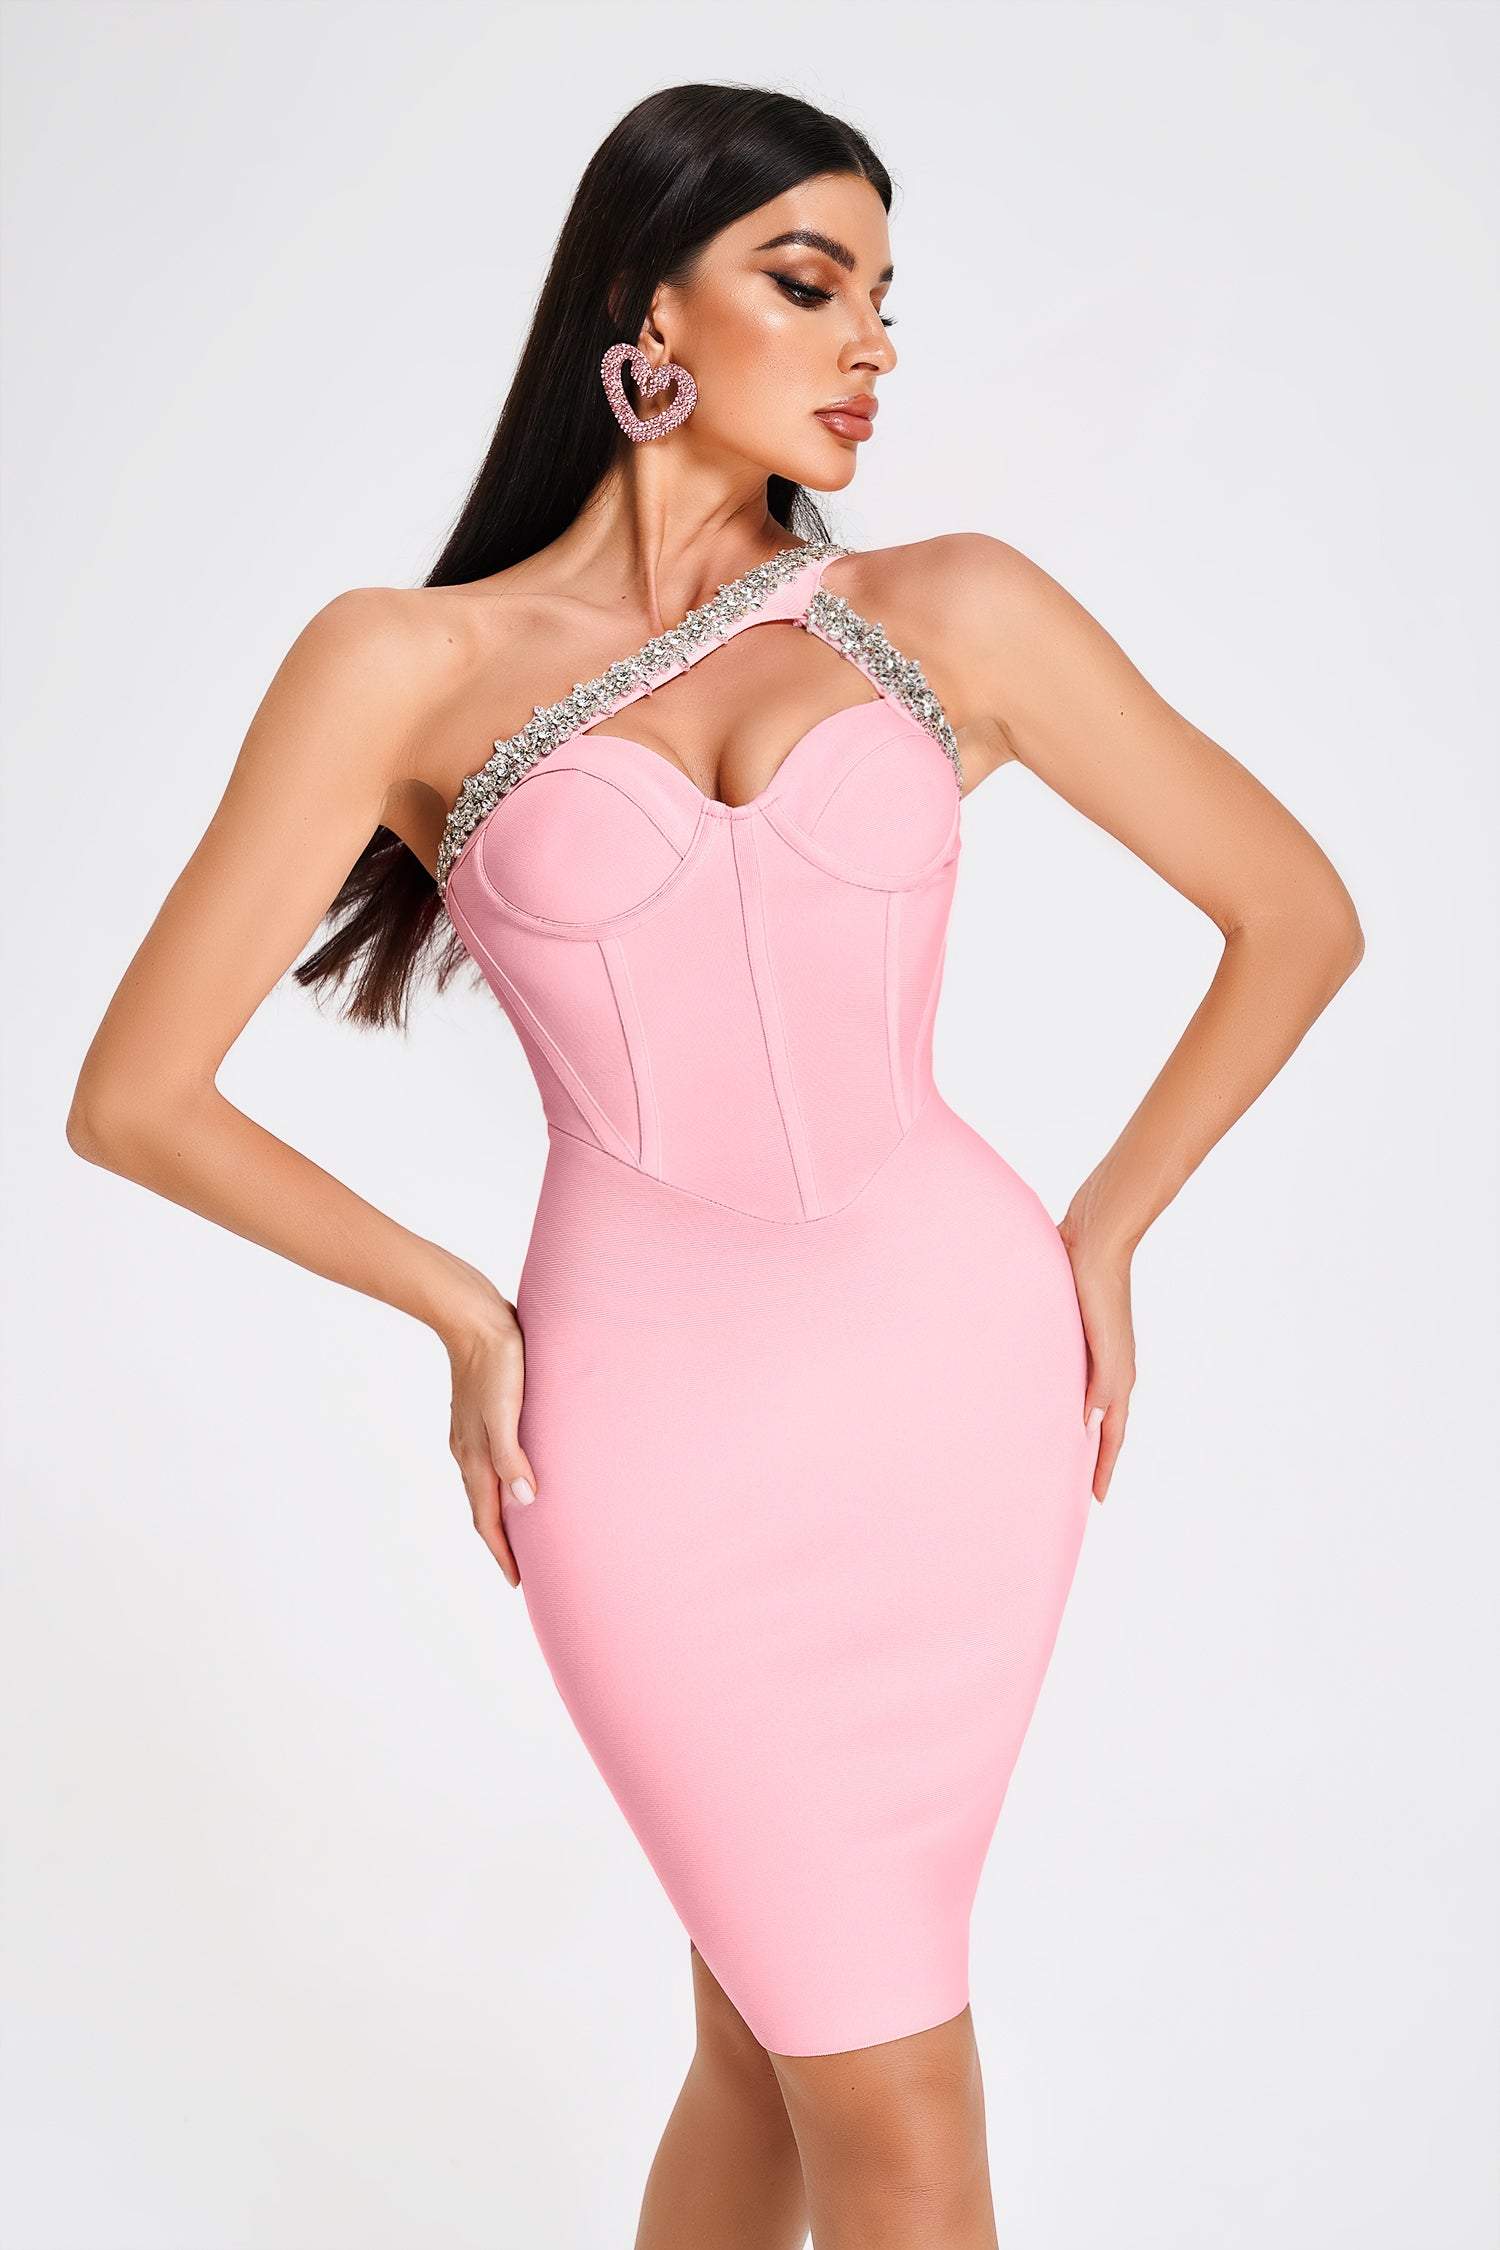 Hanny Crystal Cocktail Dress - Pink